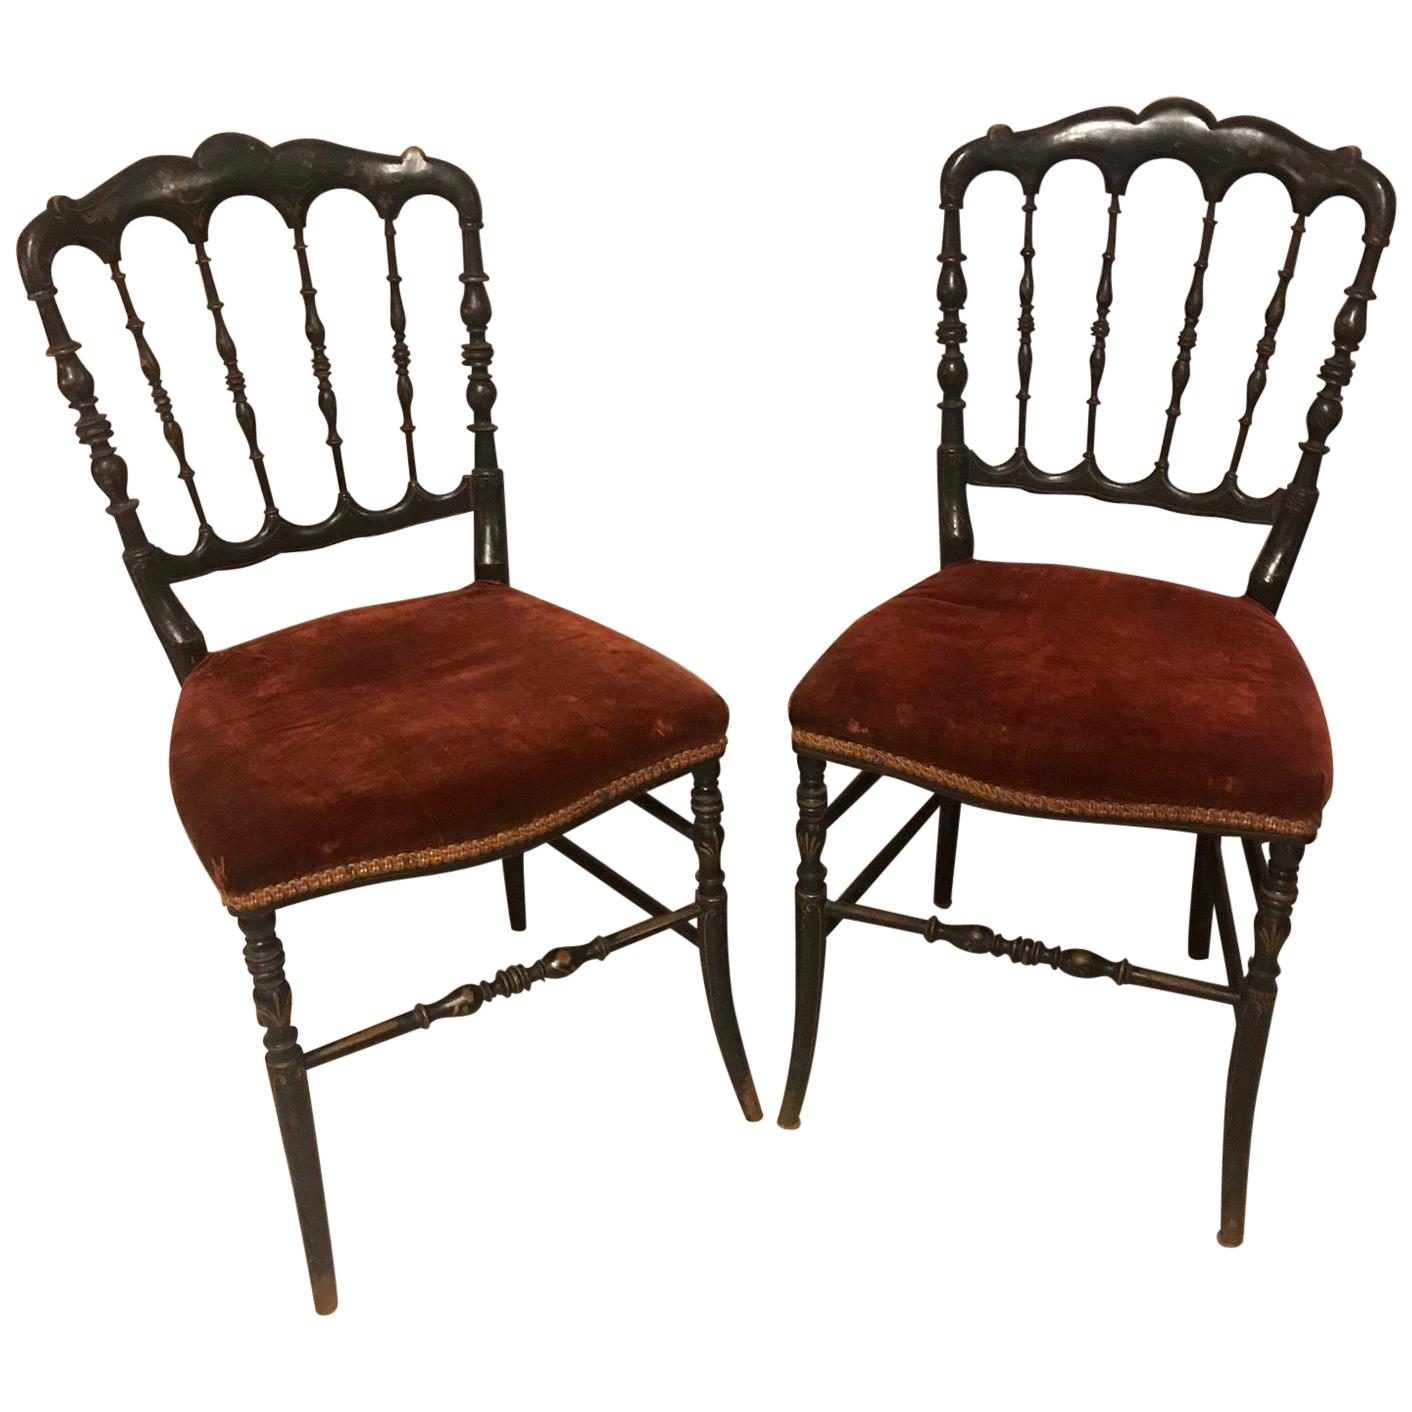 20th Century Napoleon III Style Pair of Chairs